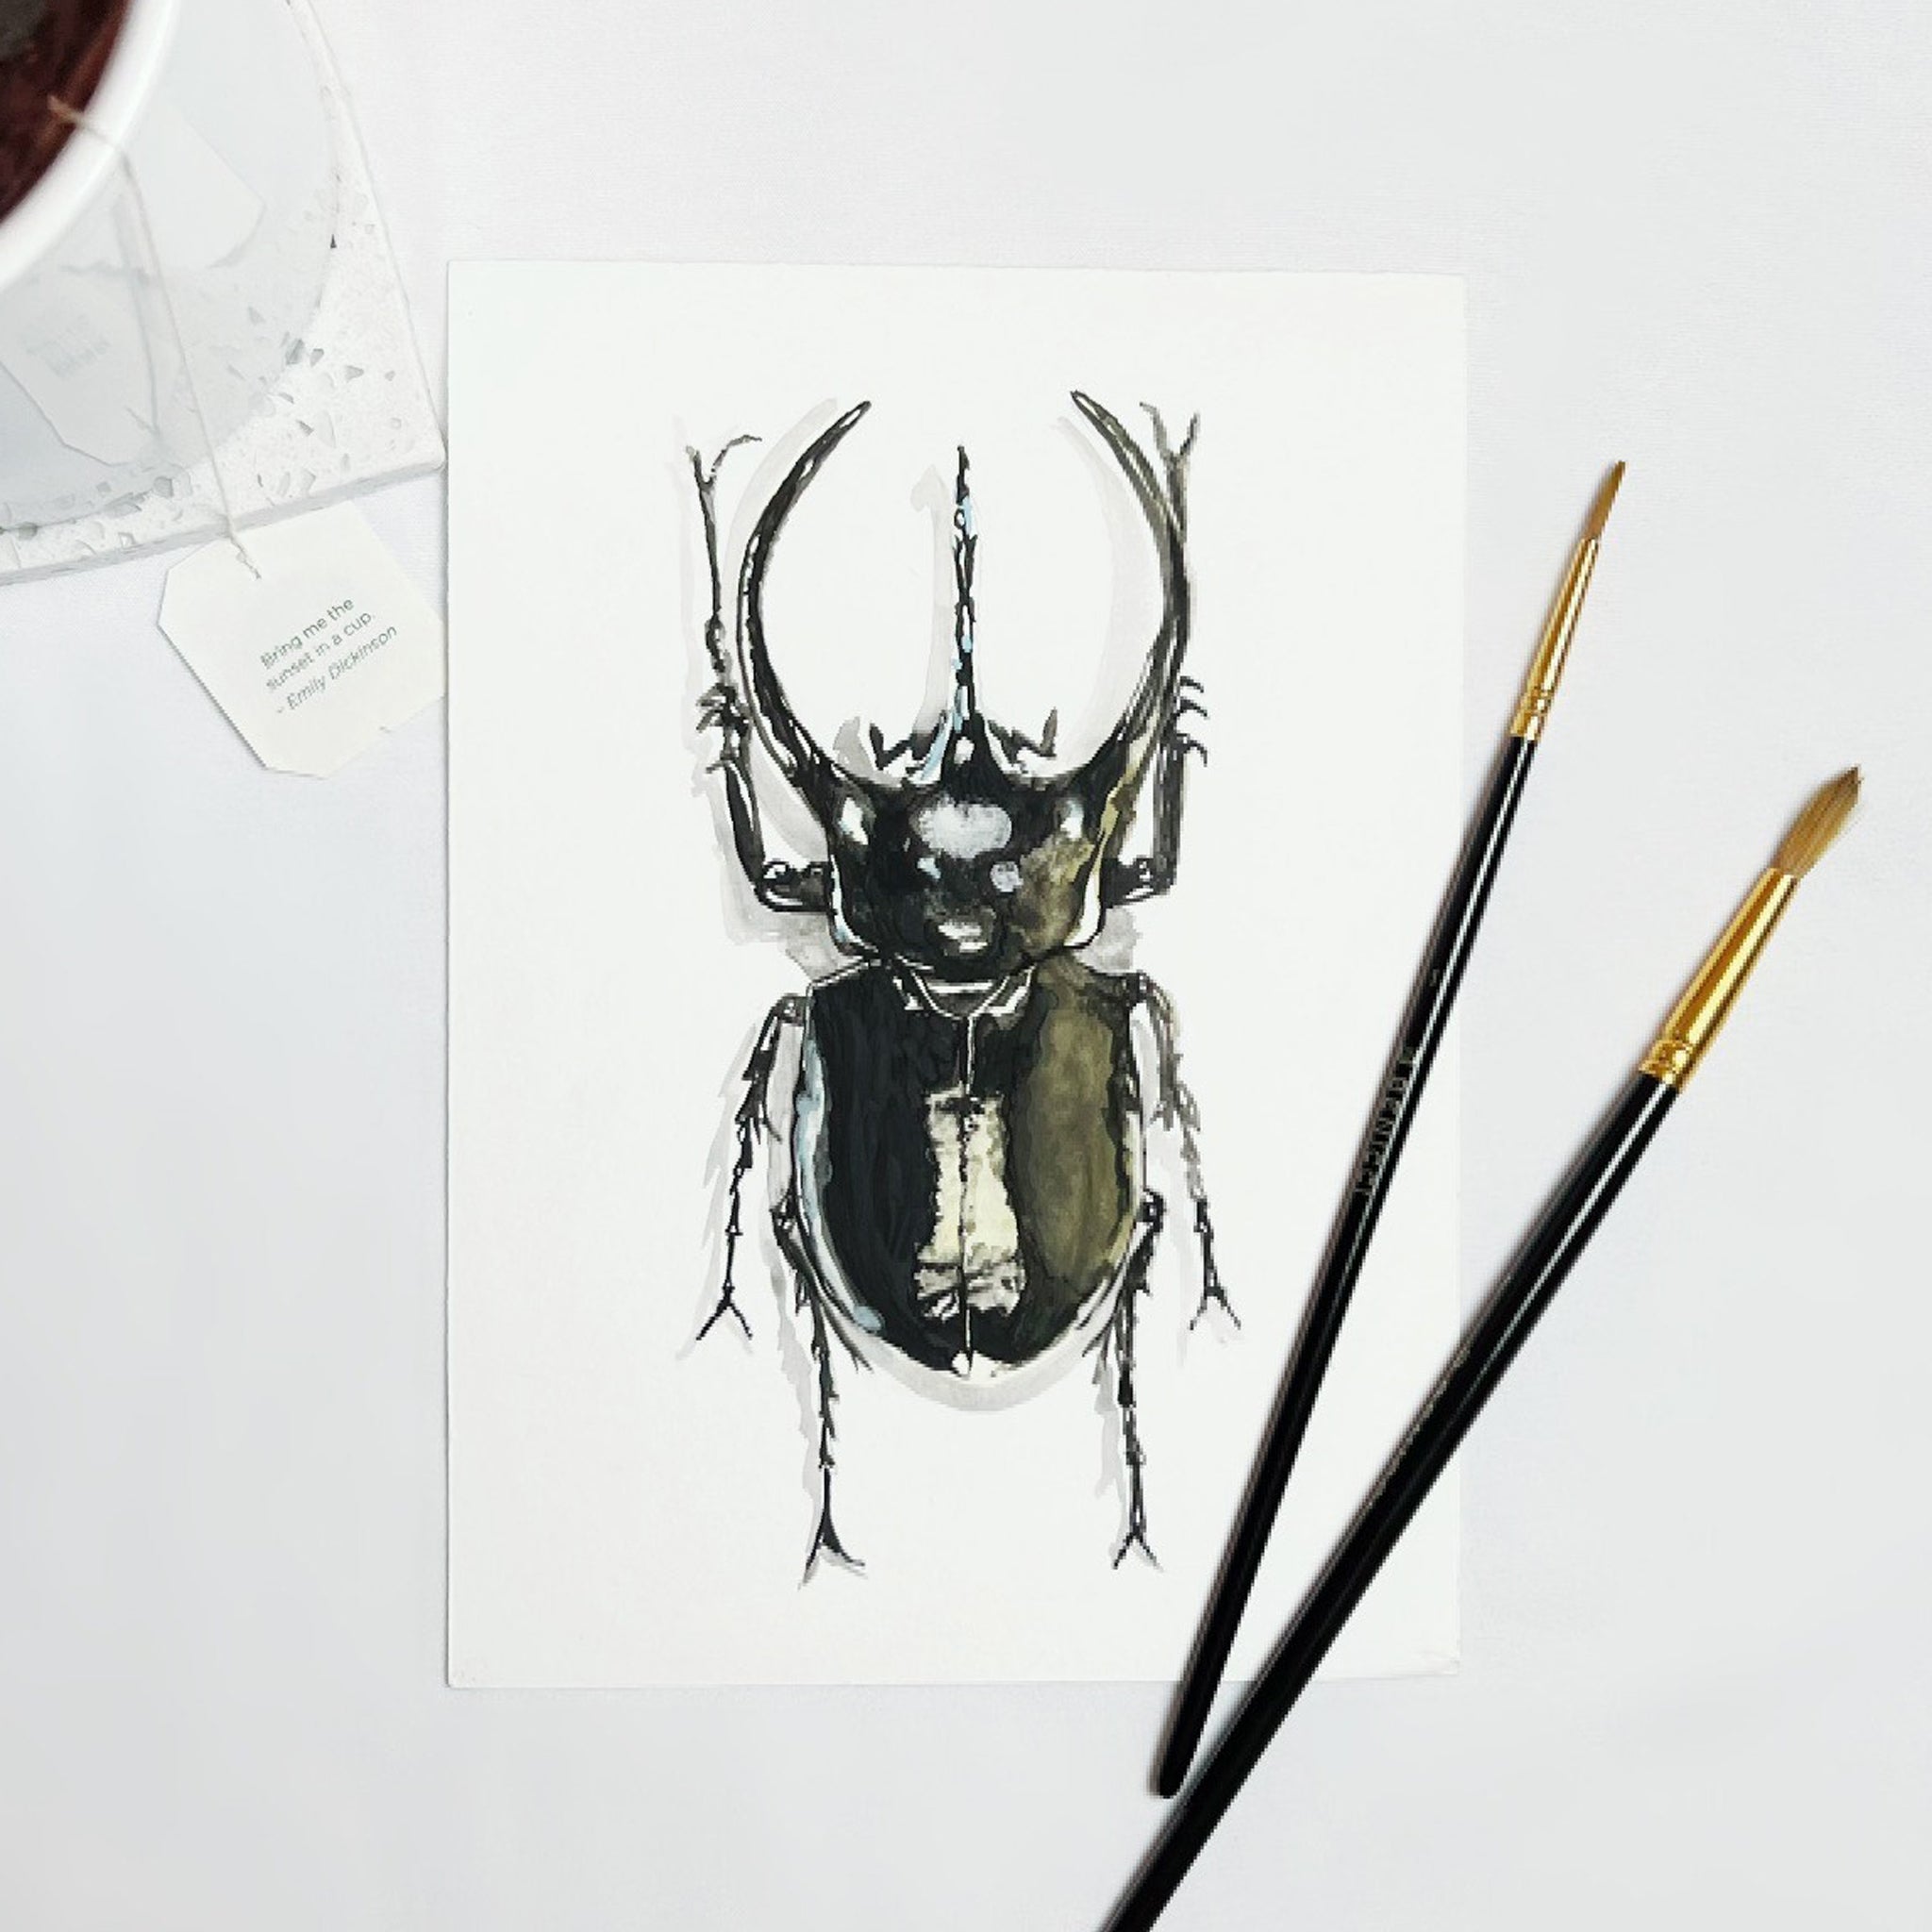 1083 Rhinoceros Beetle Drawing Images Stock Photos  Vectors   Shutterstock